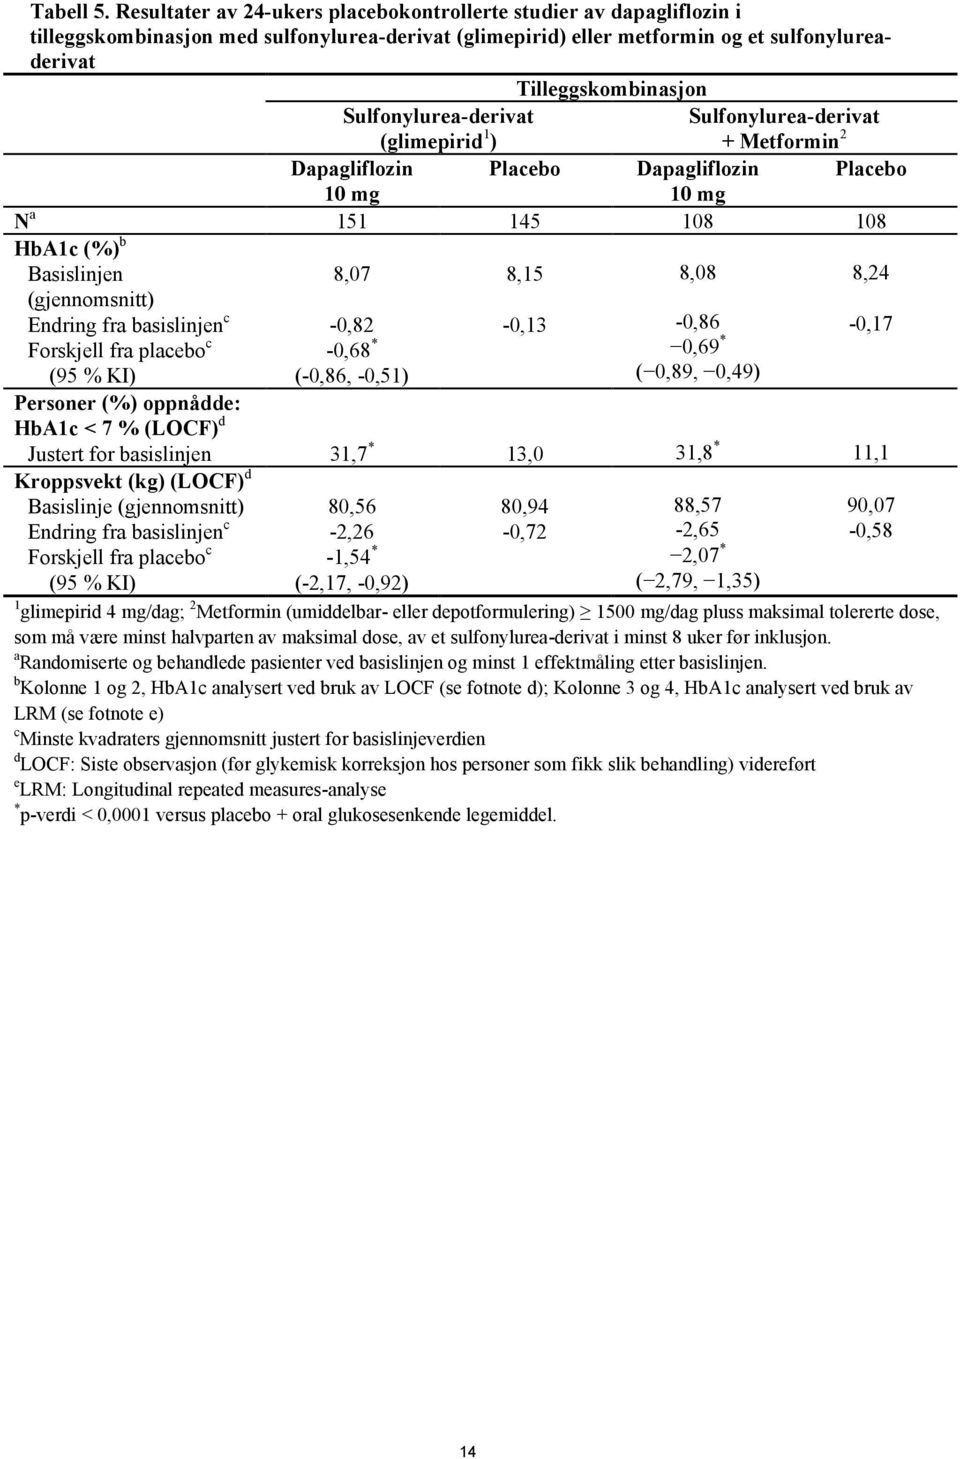 Sulfonylurea-derivat (glimepirid 1 ) Sulfonylurea-derivat + Metformin 2 Dapagliflozin Placebo Dapagliflozin Placebo 10 mg 10 mg N a 151 145 108 108 HbA1c (%) b Basislinjen (gjennomsnitt) Endring fra